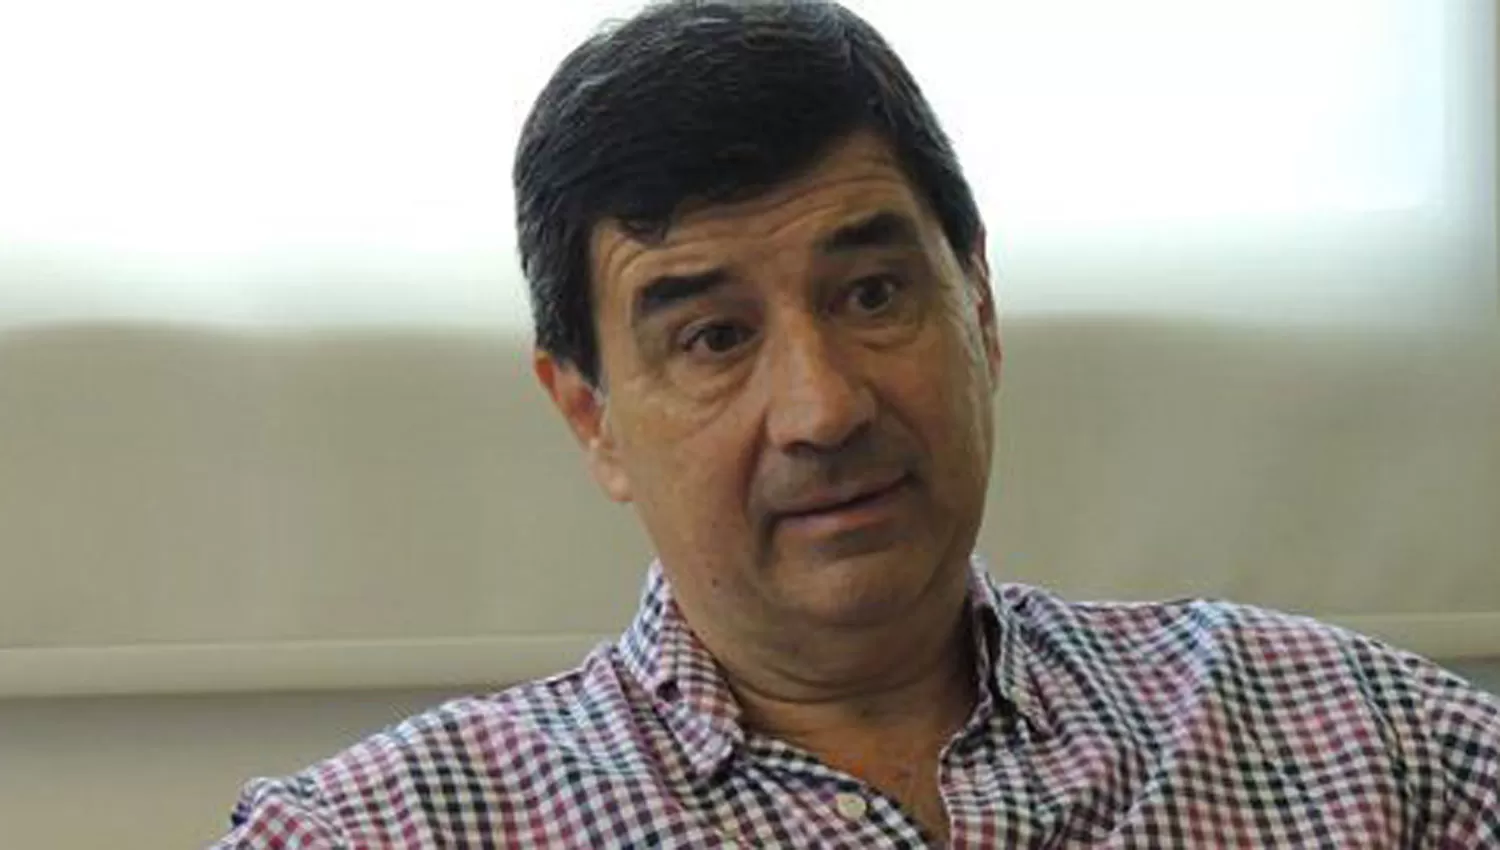 Gerardo Díaz Beltrán